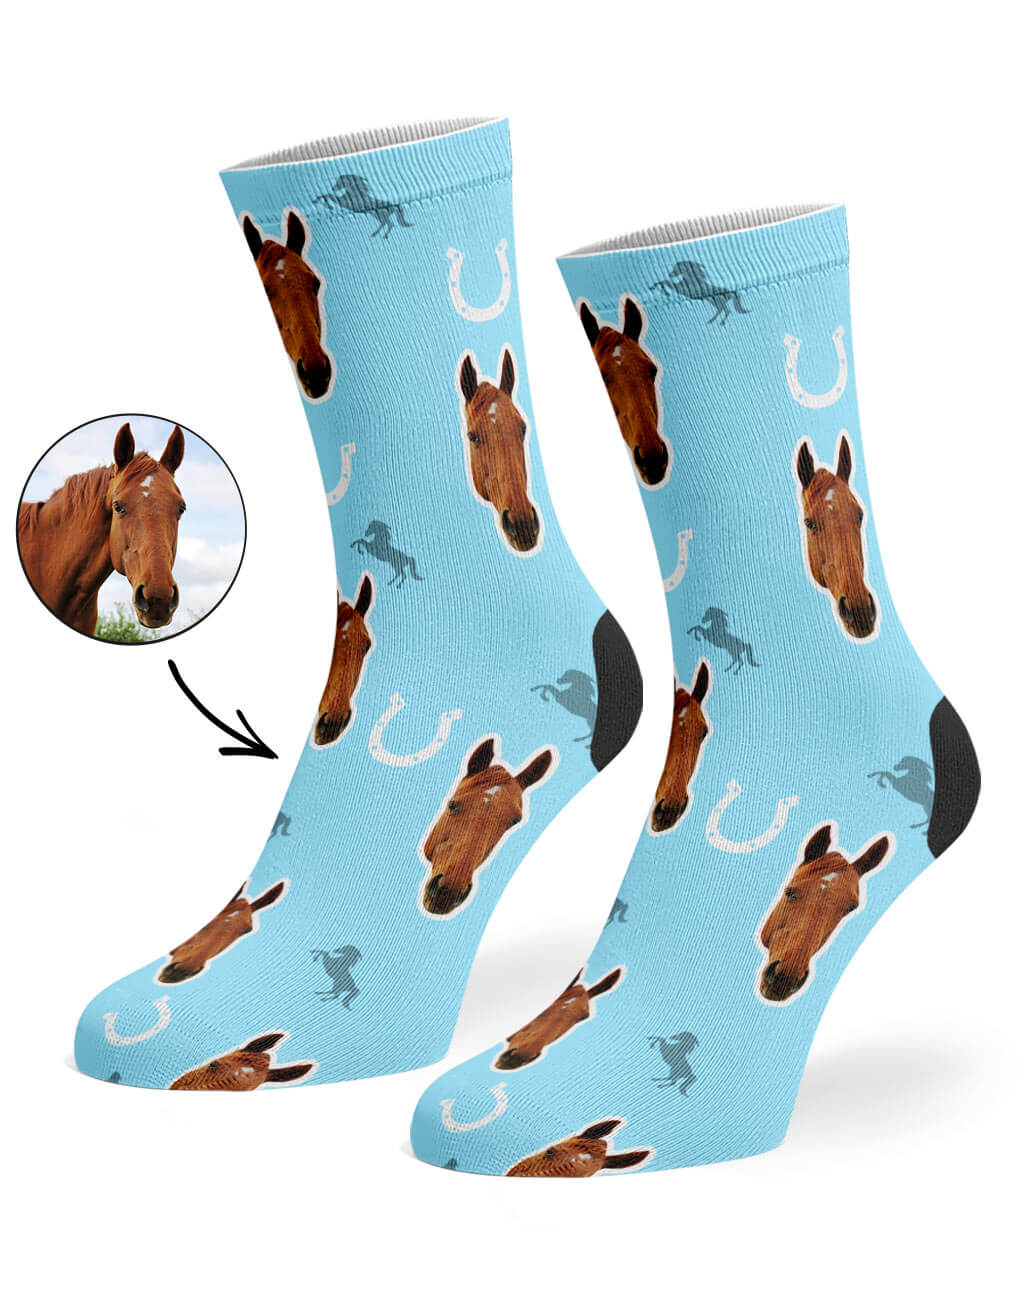 Your Horse on Custom Socks